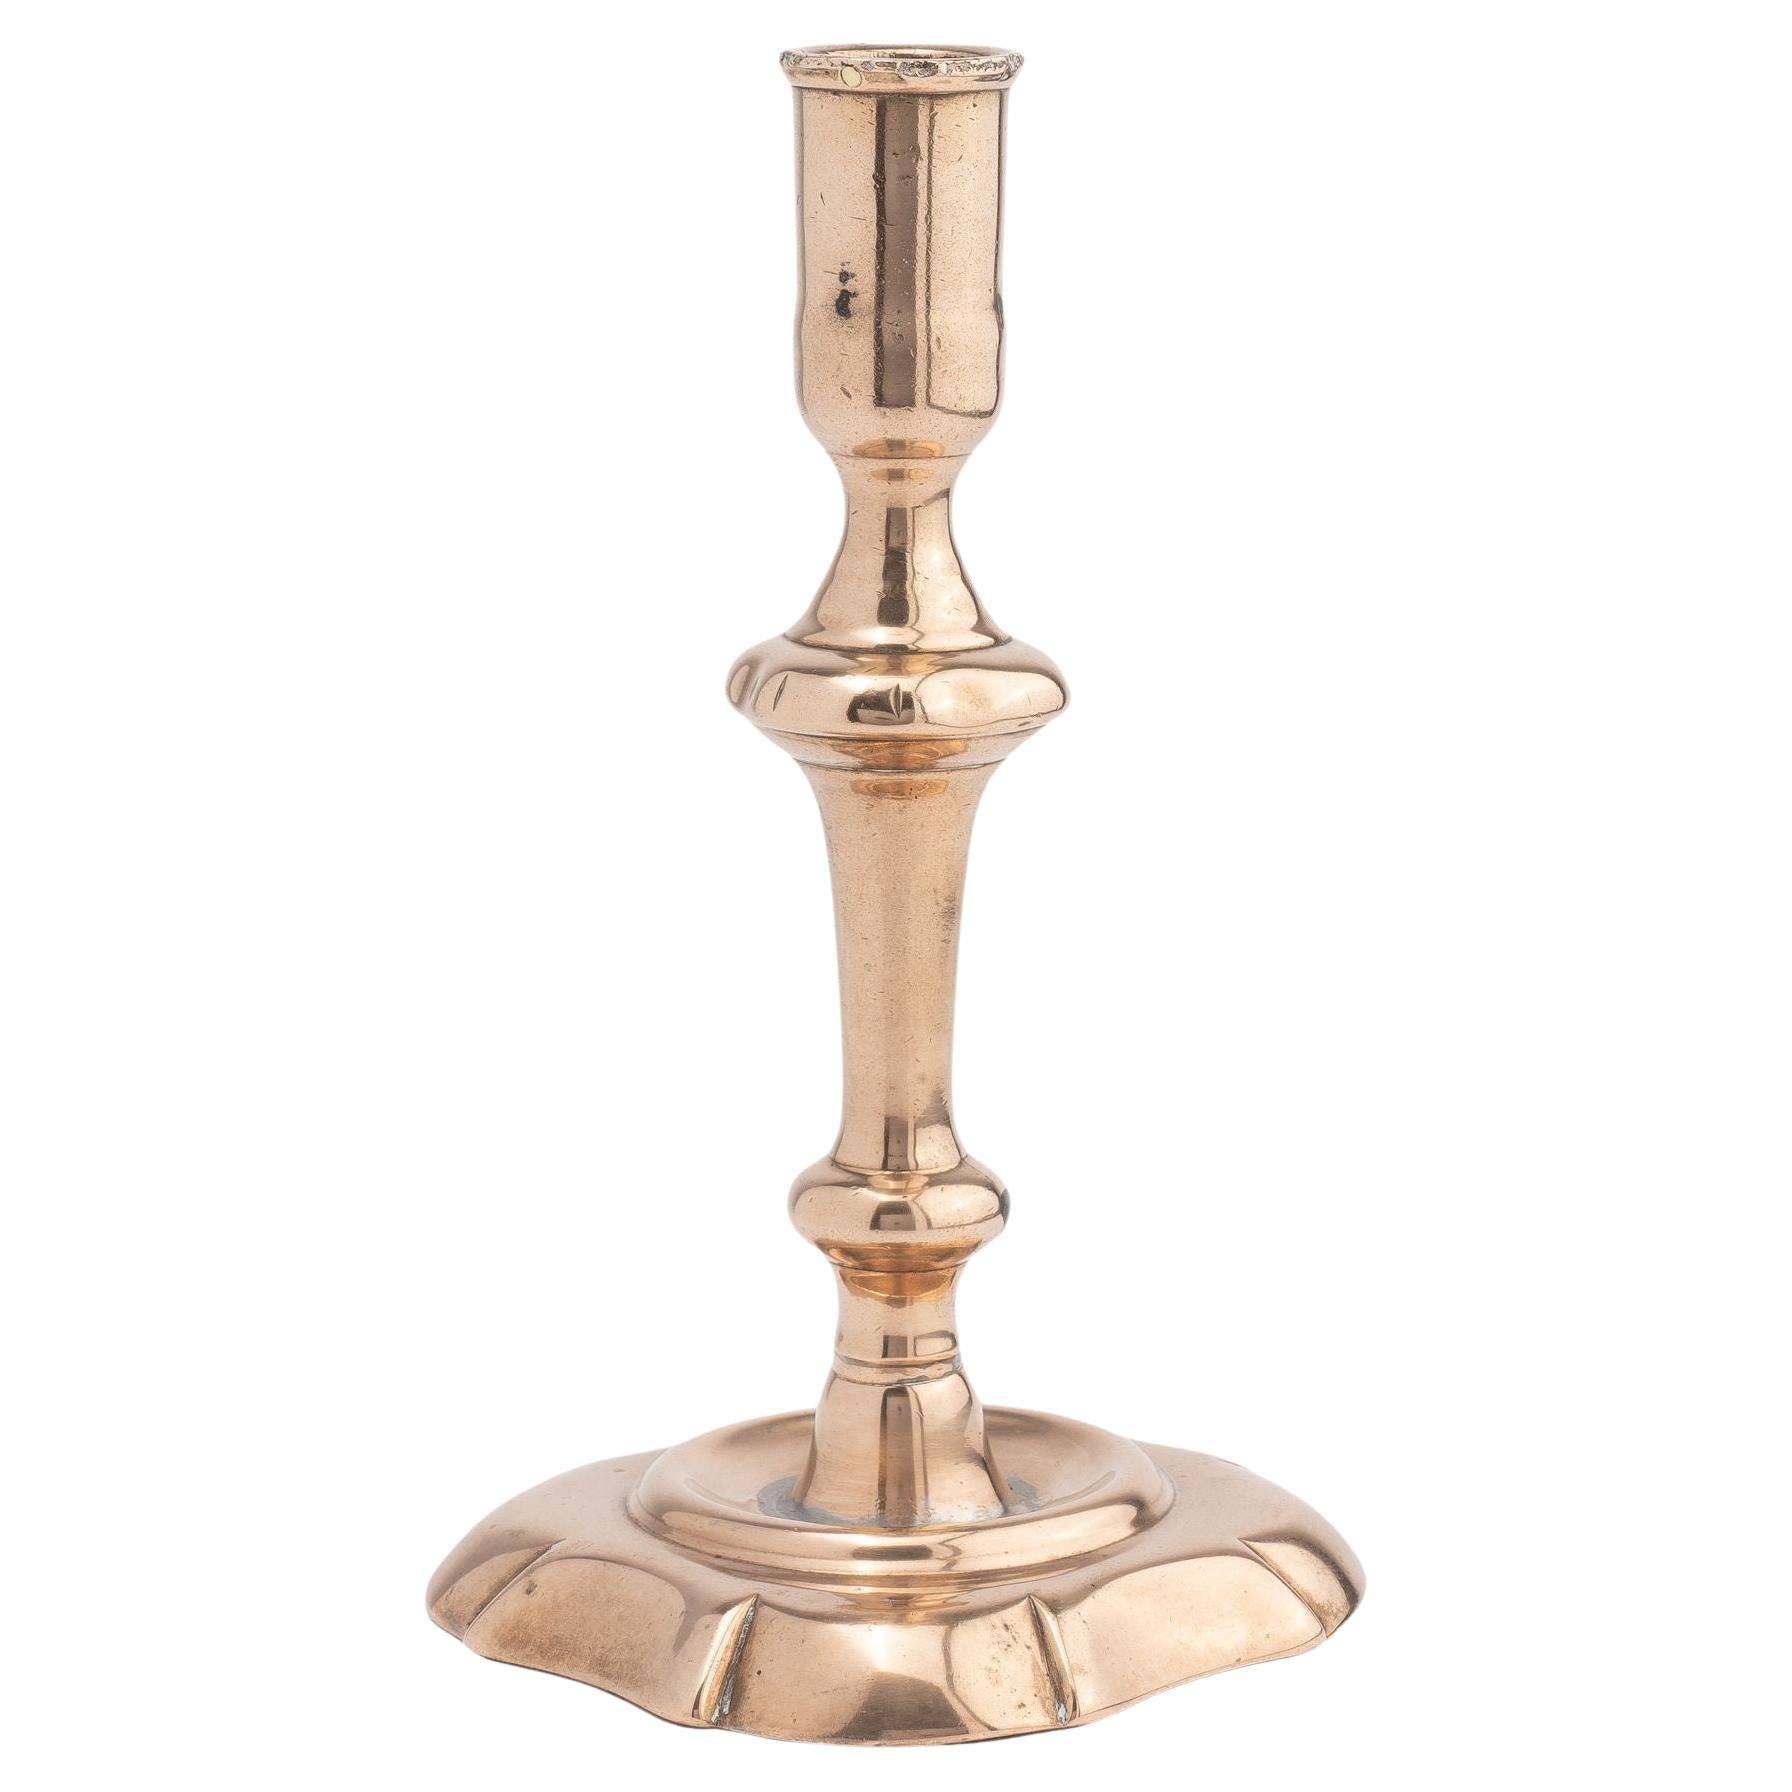 English cast bell metal Queen Anne baluster shaft candlestick, 1750-60